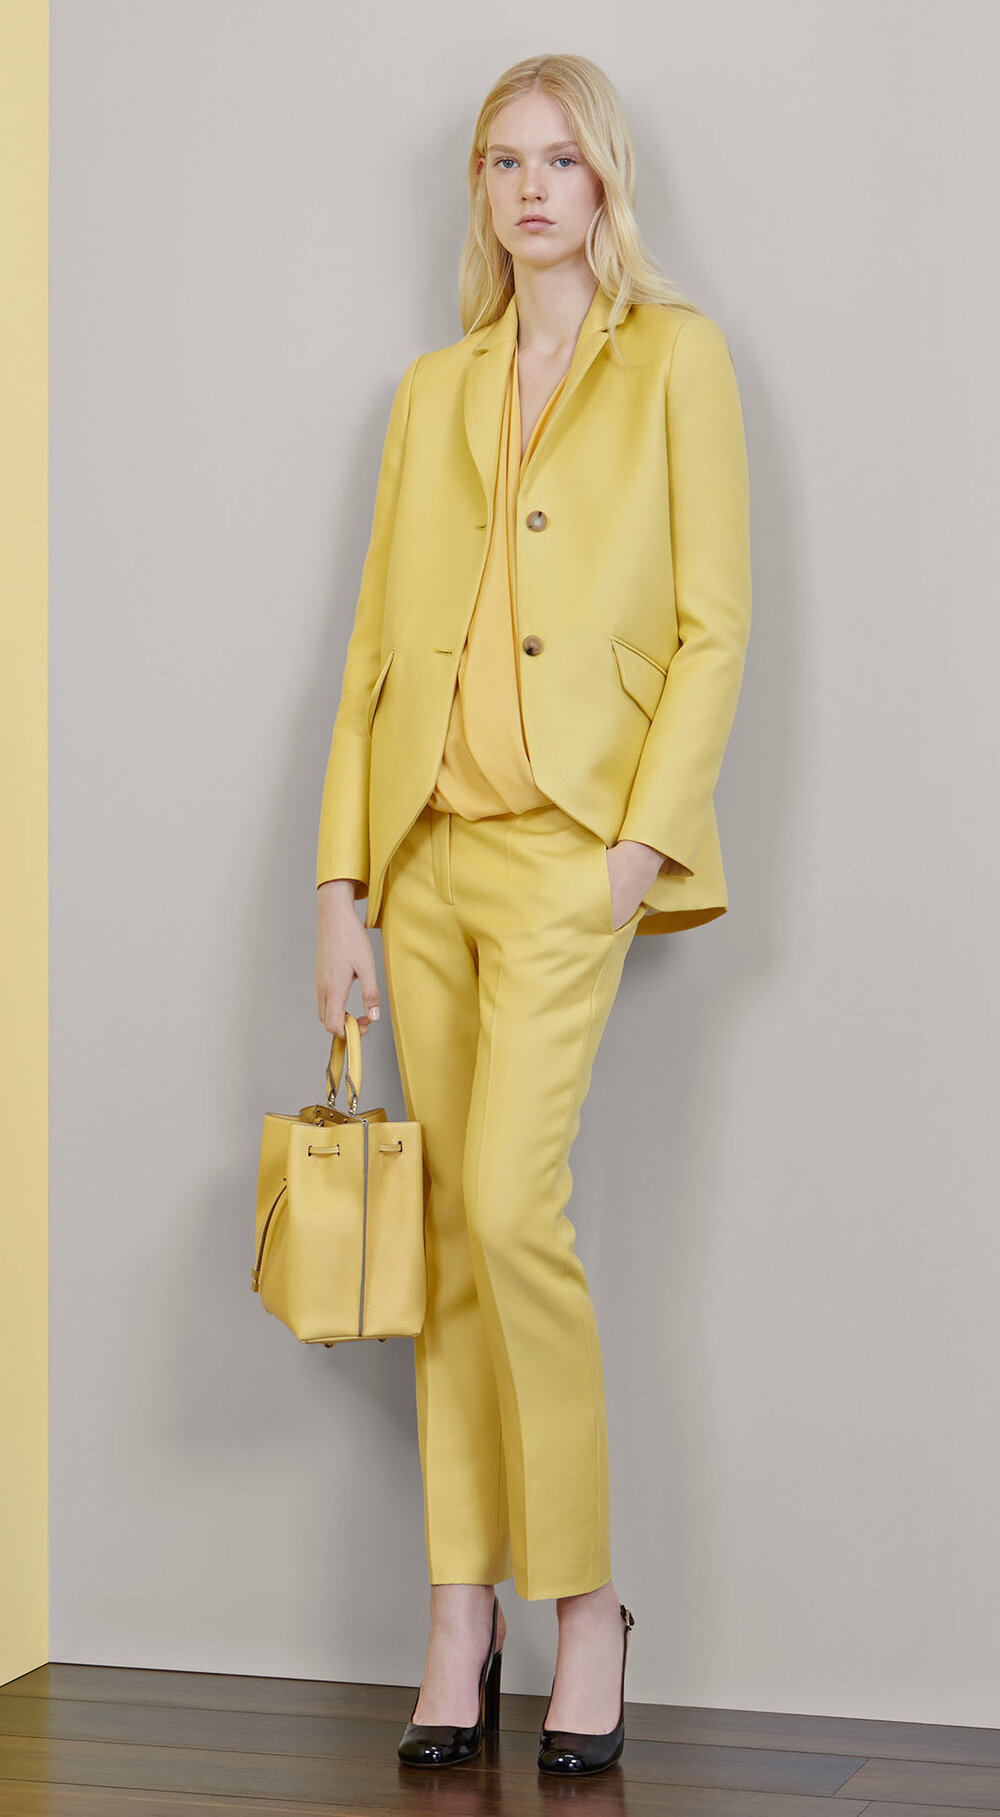 yellow-slim-pants-suit-black-shoe-pumps-yellow-top-blouse-blonde-yellow-jacket-blazer-yellow-bag-mono-spring-work.jpg